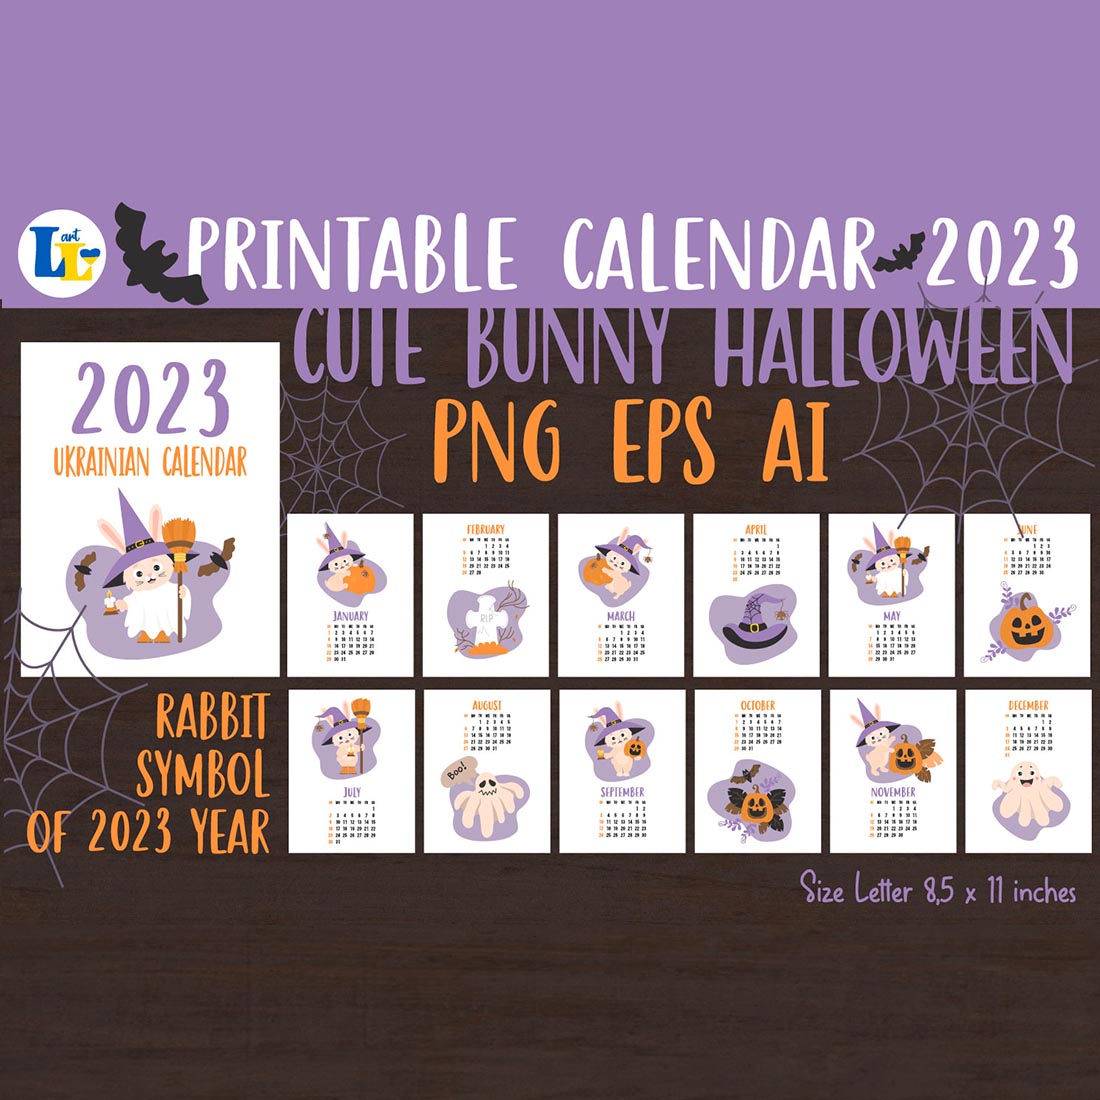 Printable Design Calendar 2023 cover image.